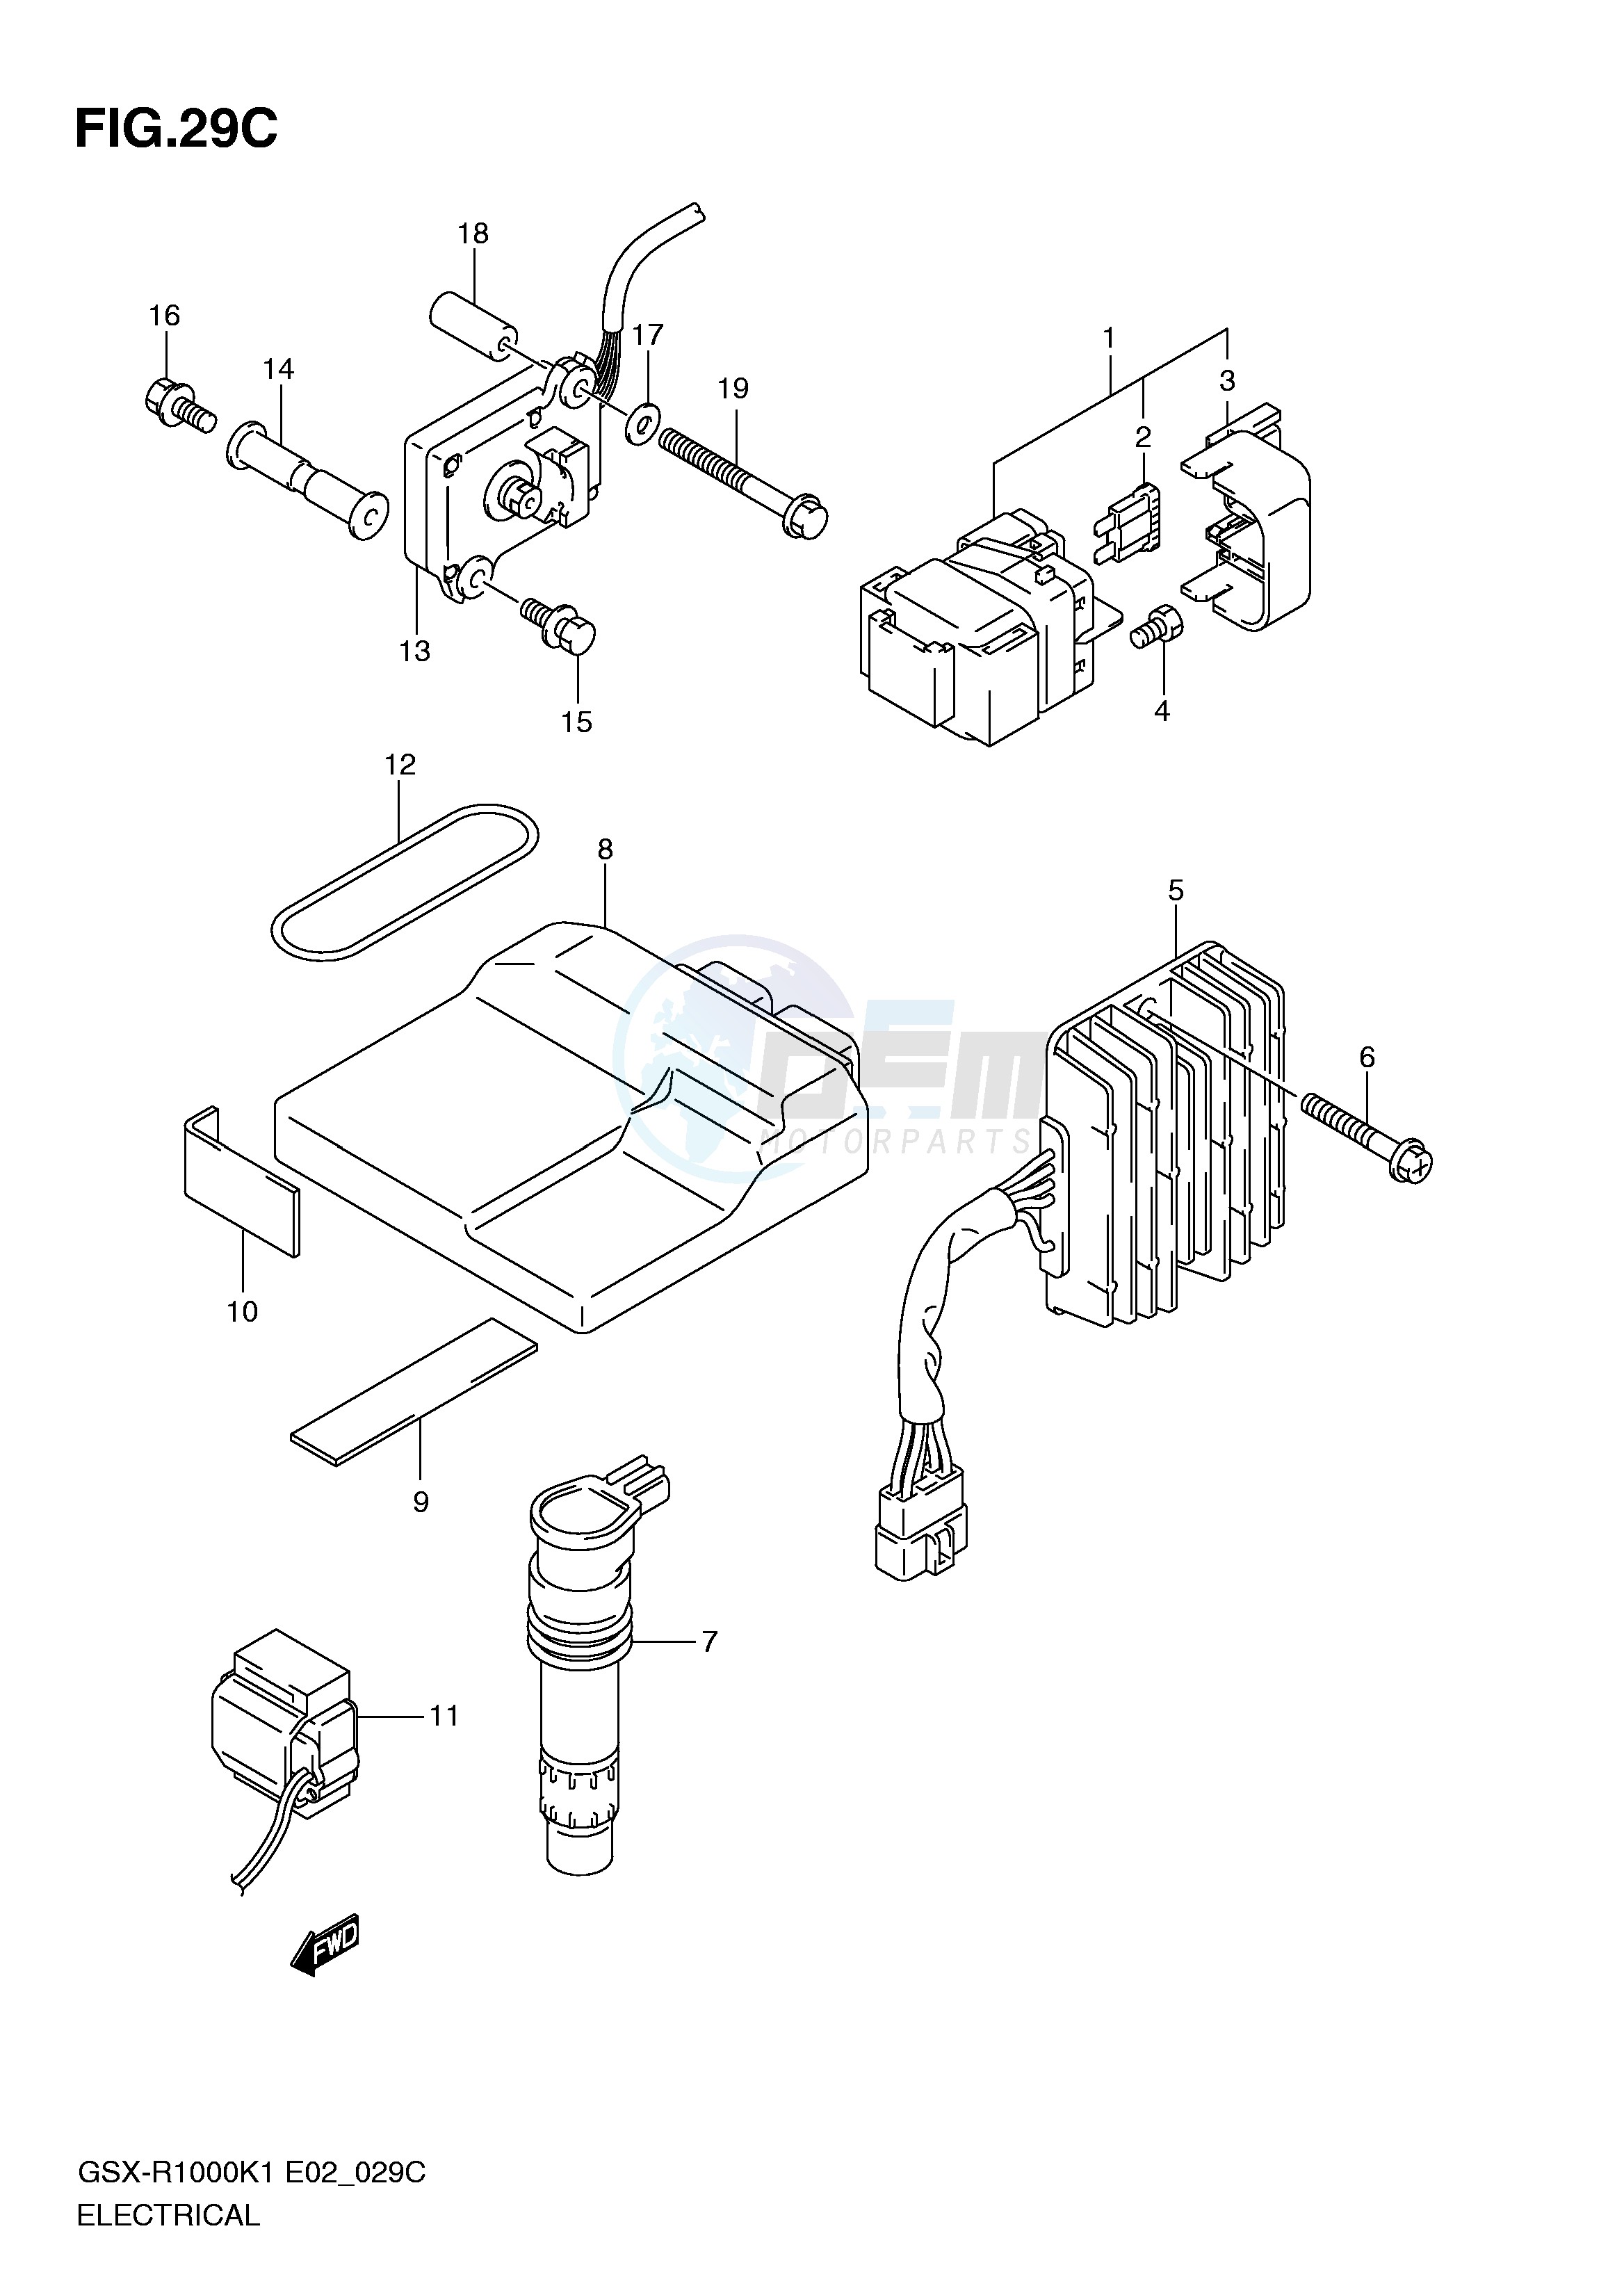 ELECTRICAL (GSX-R1000K1 P37) blueprint